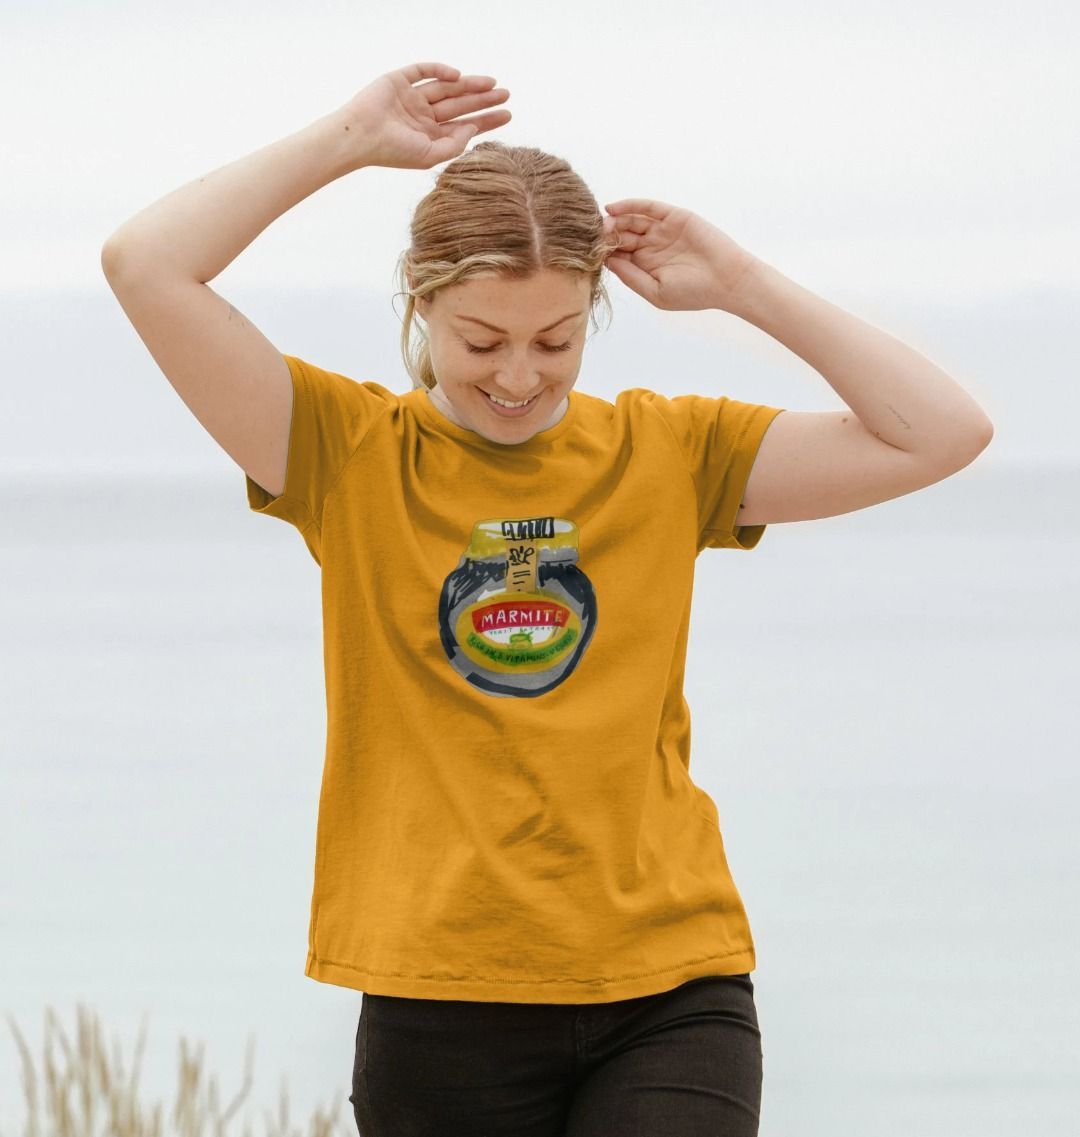 marmighty organic women's tee - Printed T-shirt - Sarah Millin